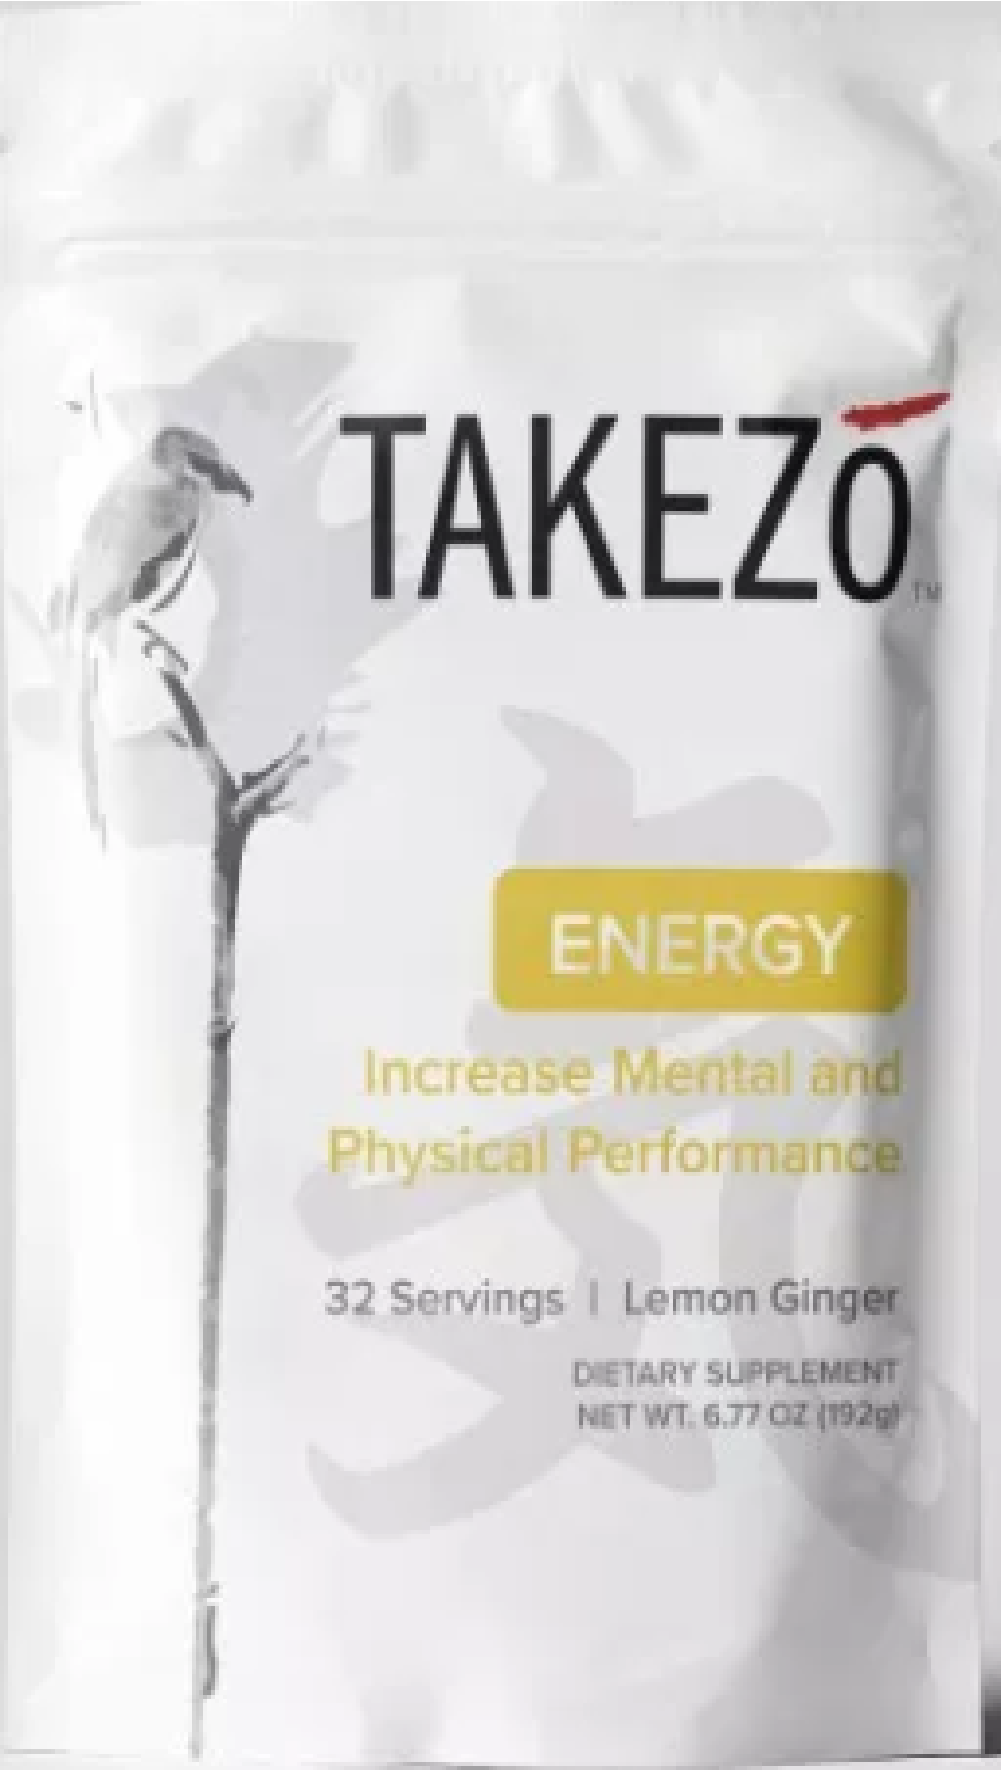 Takezo Energy